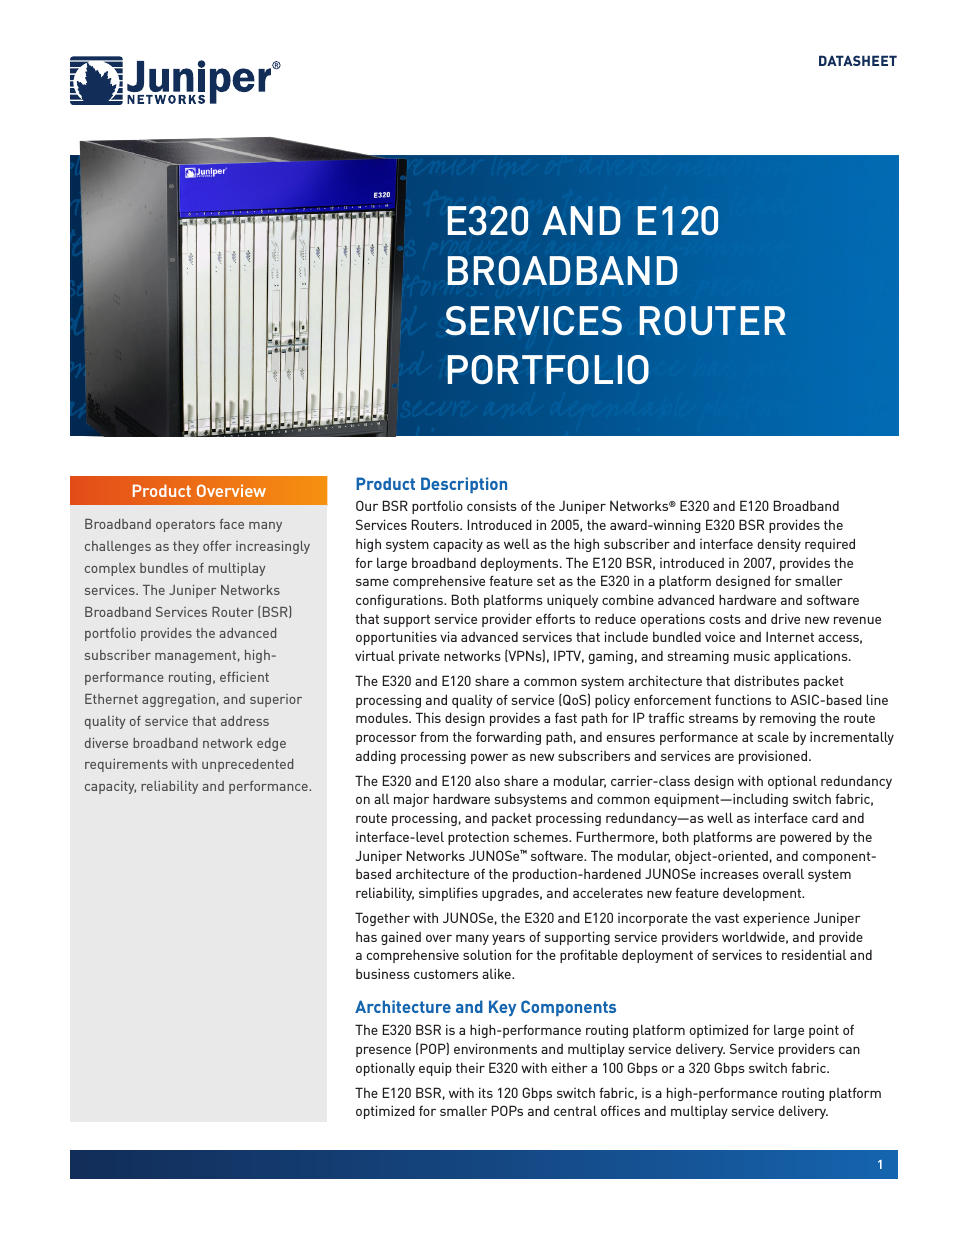 Broadband Services Router. E320